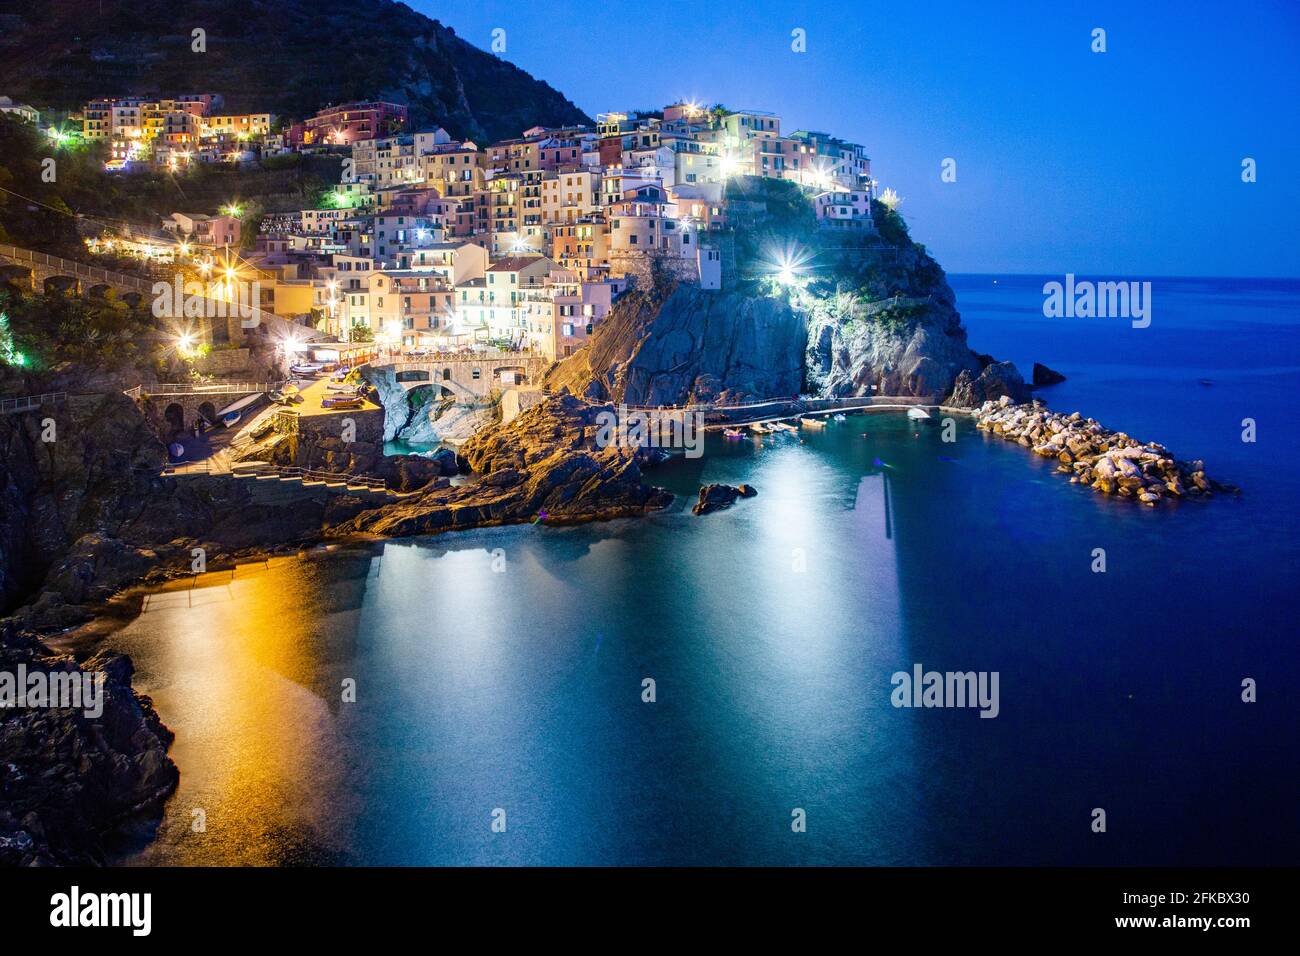 Picturesque village of Manarola in Cinque Terre, UNESCO World Heritage Site, province of La Spezia, Liguria region, Italy, Europe Stock Photo